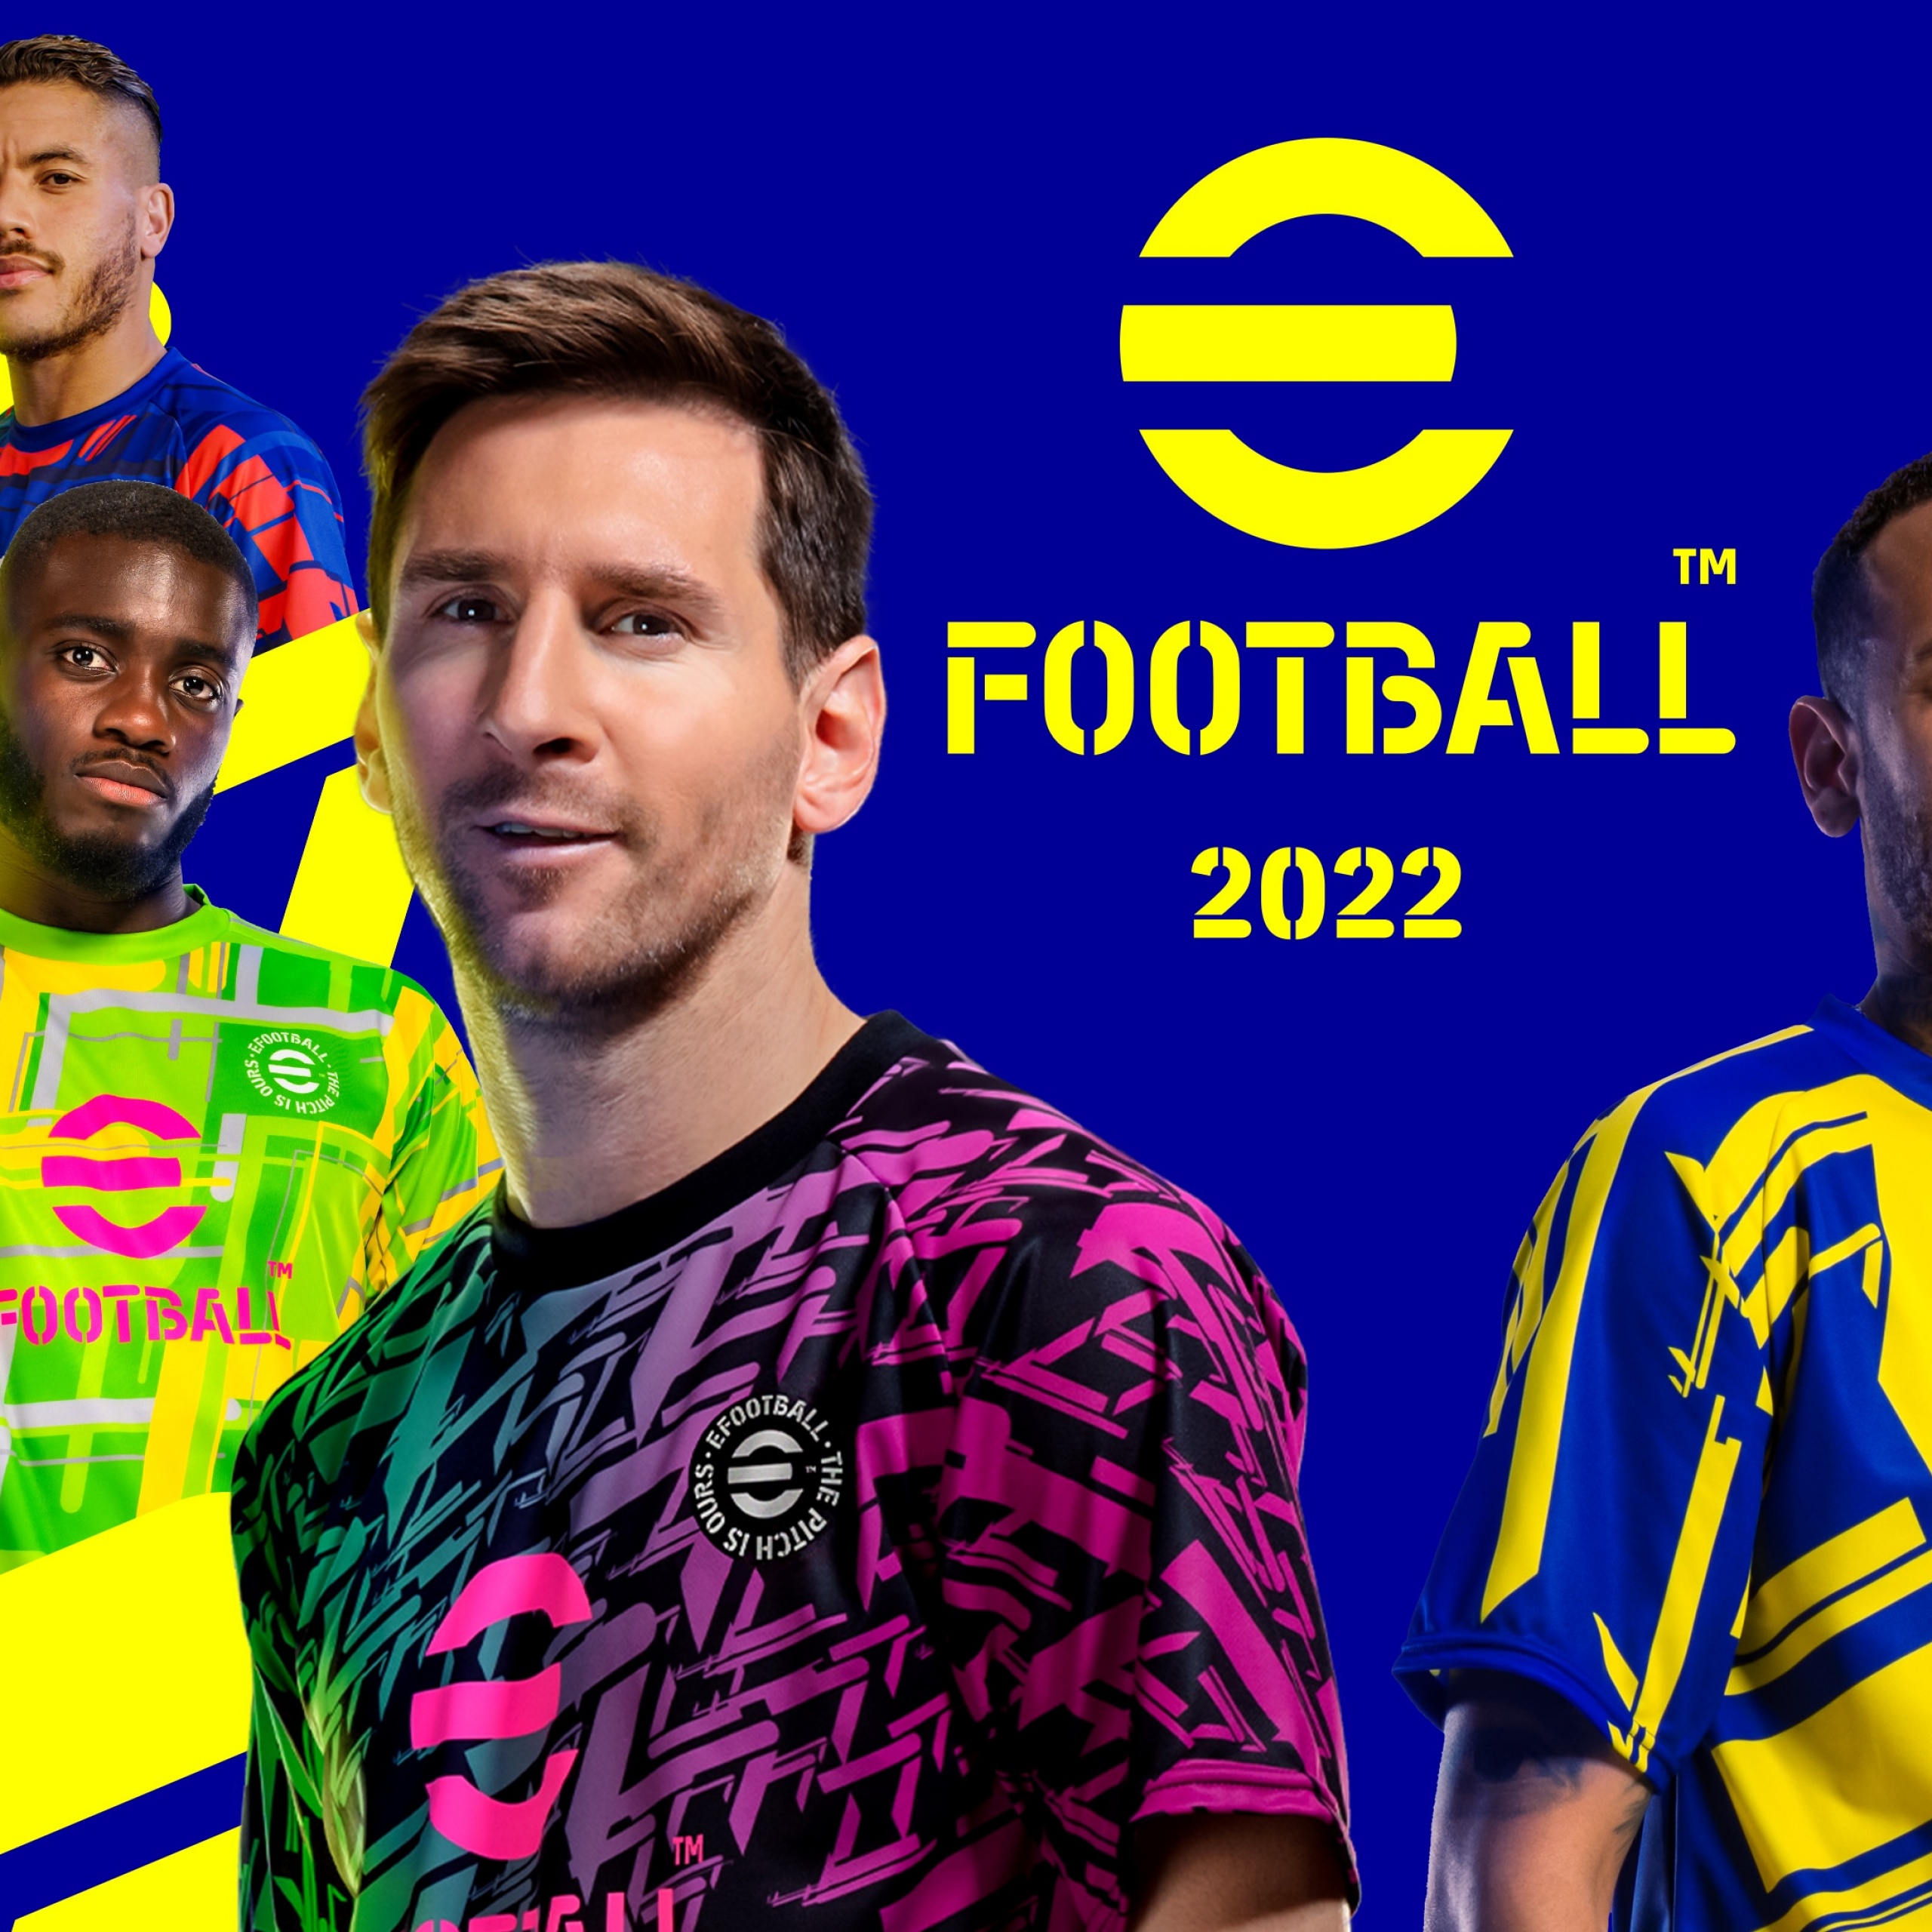 eFootball 2022 Wallpaper 4K, 2022 Games, Esports, Lionel Messi, Neymar Jr, Games